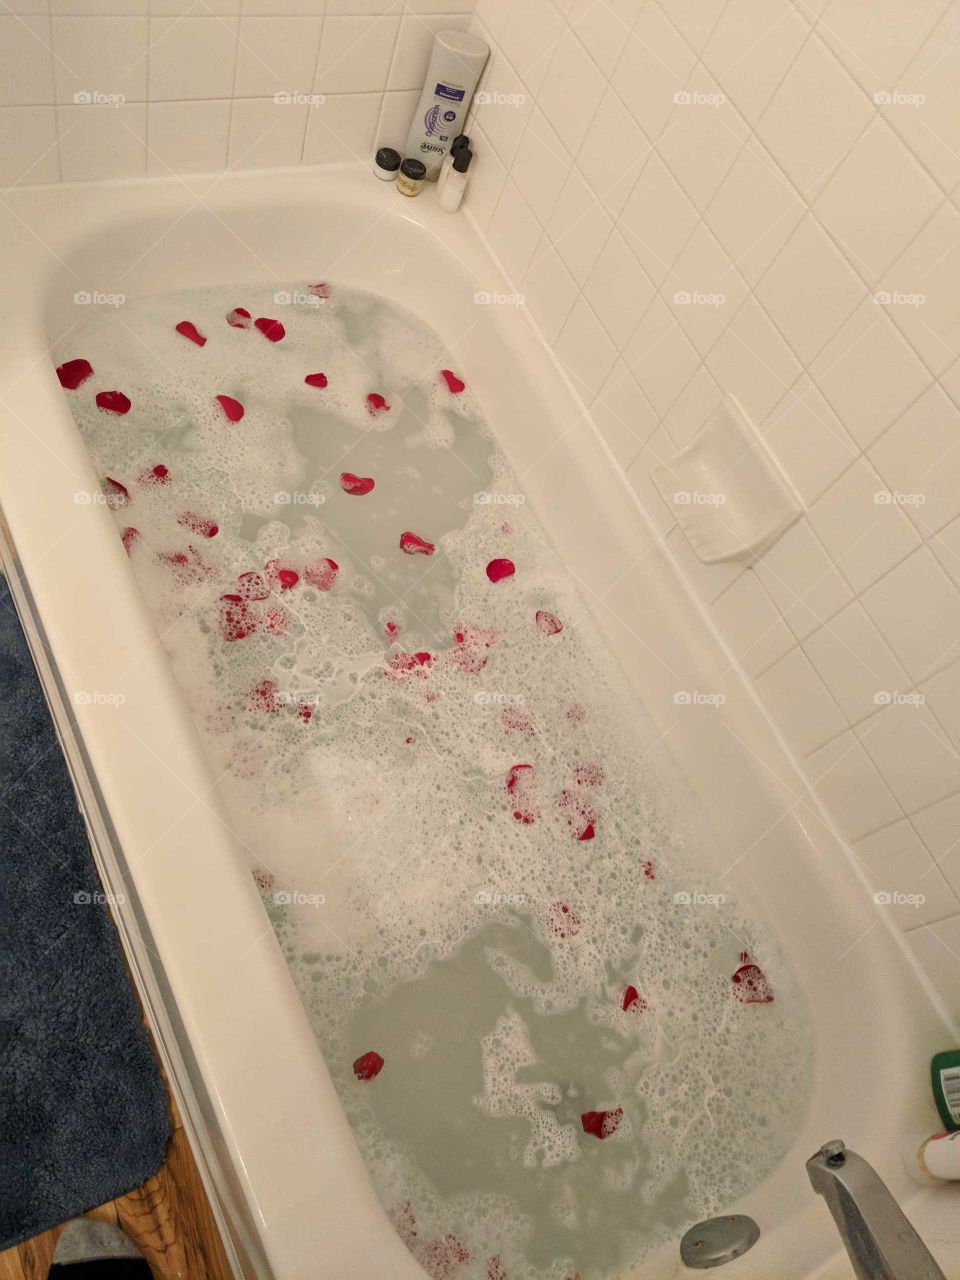 flower bath with rose petals